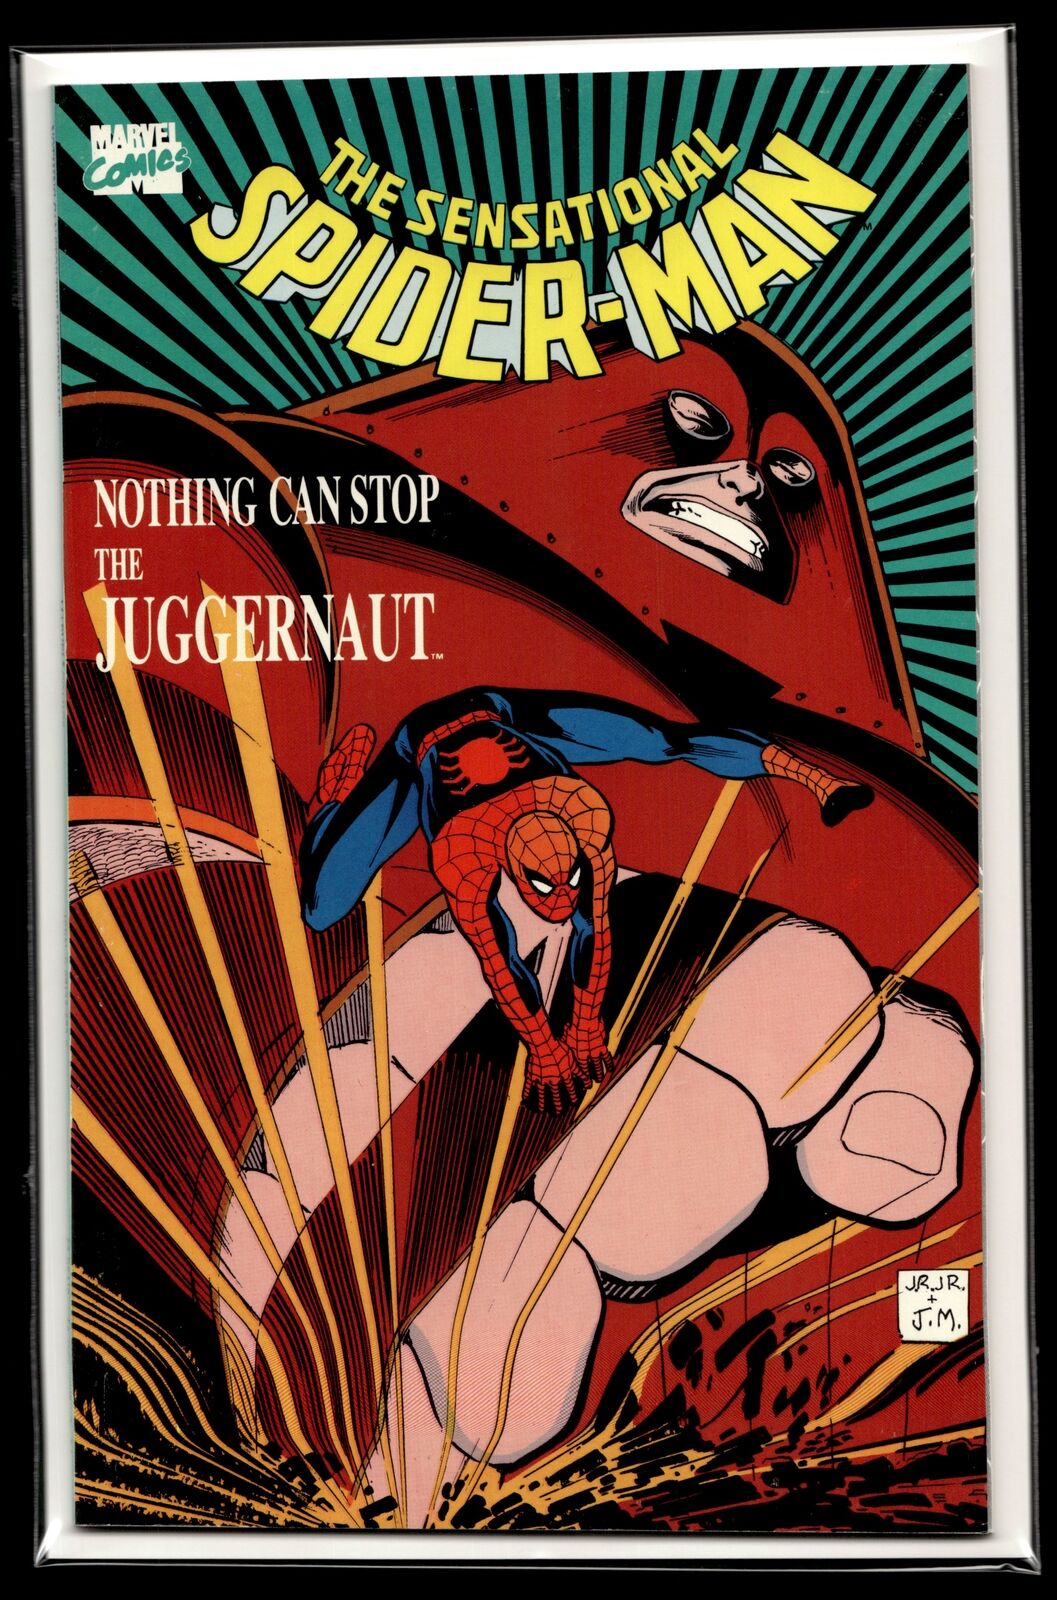 1989 Sensational Spider-Man #1 Nothing Can Stop The Juggernaut Marvel Comic